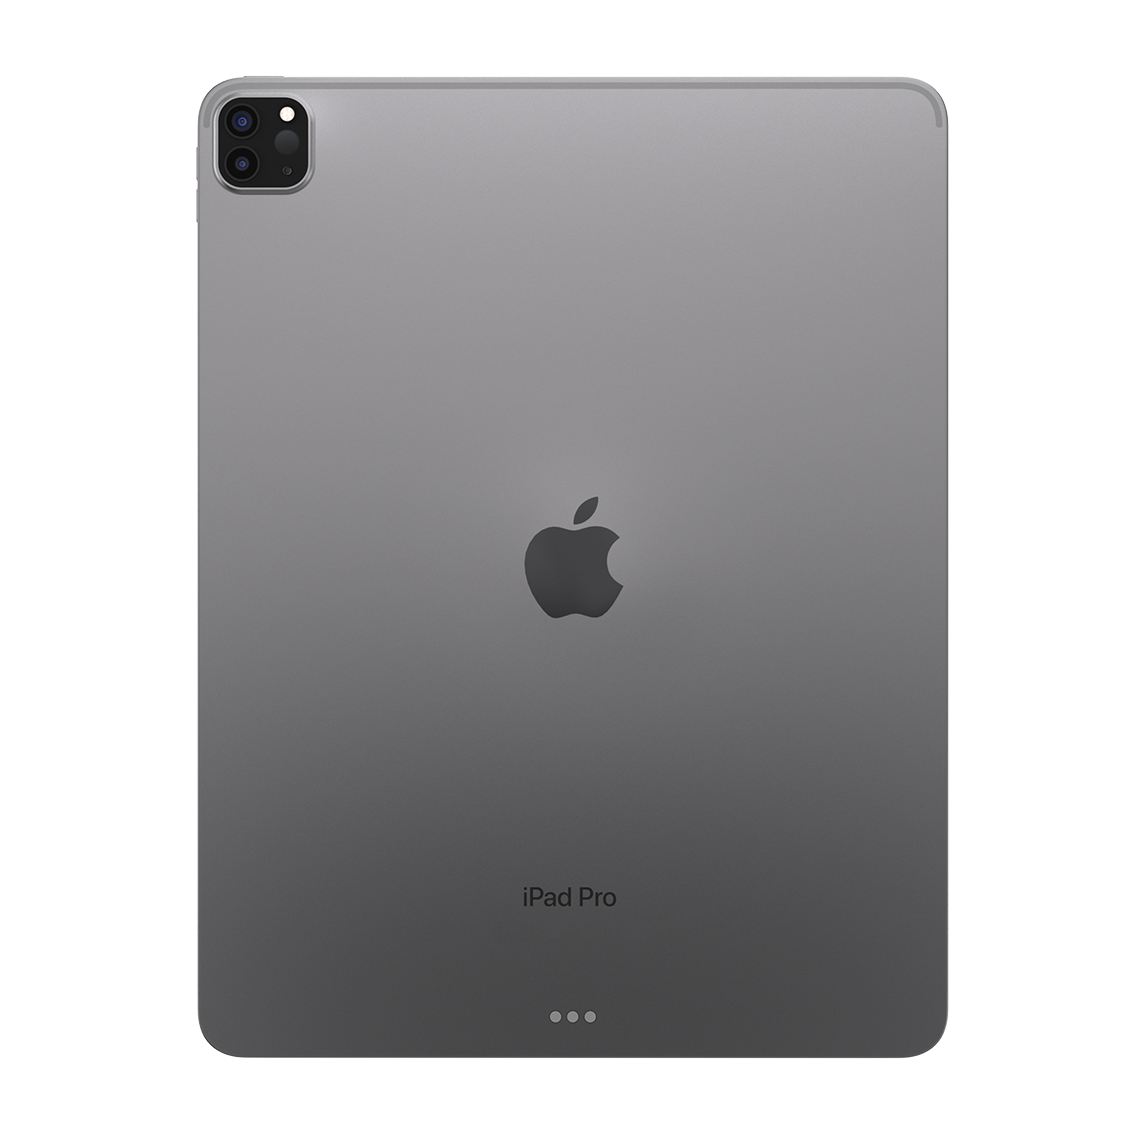 Apple iPad Pro 12.9-inch 5th Generation - Space Gray - 128GB, Wi-Fi + Cellular, Grade B